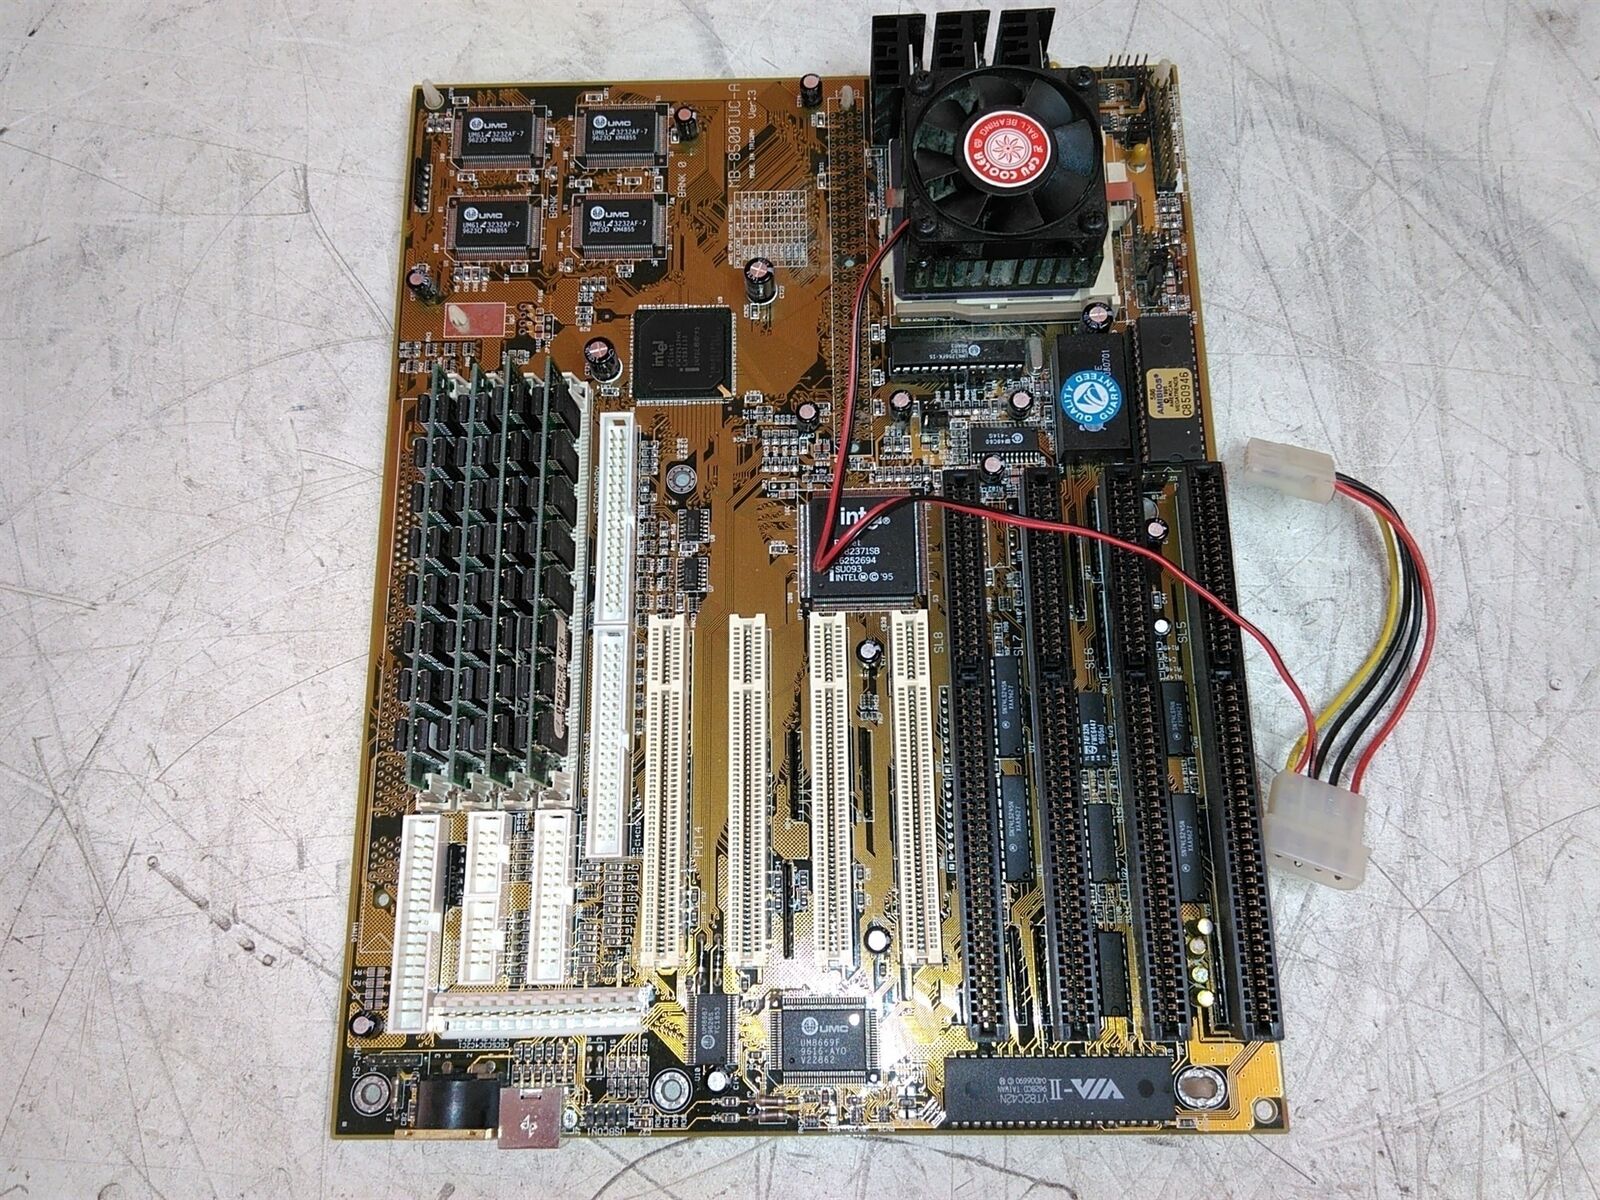 MB-8500TUC-A Socket 7 Motherboard IBM 6X86 P150+ 120MHz 80MB RAM 4x ISA 